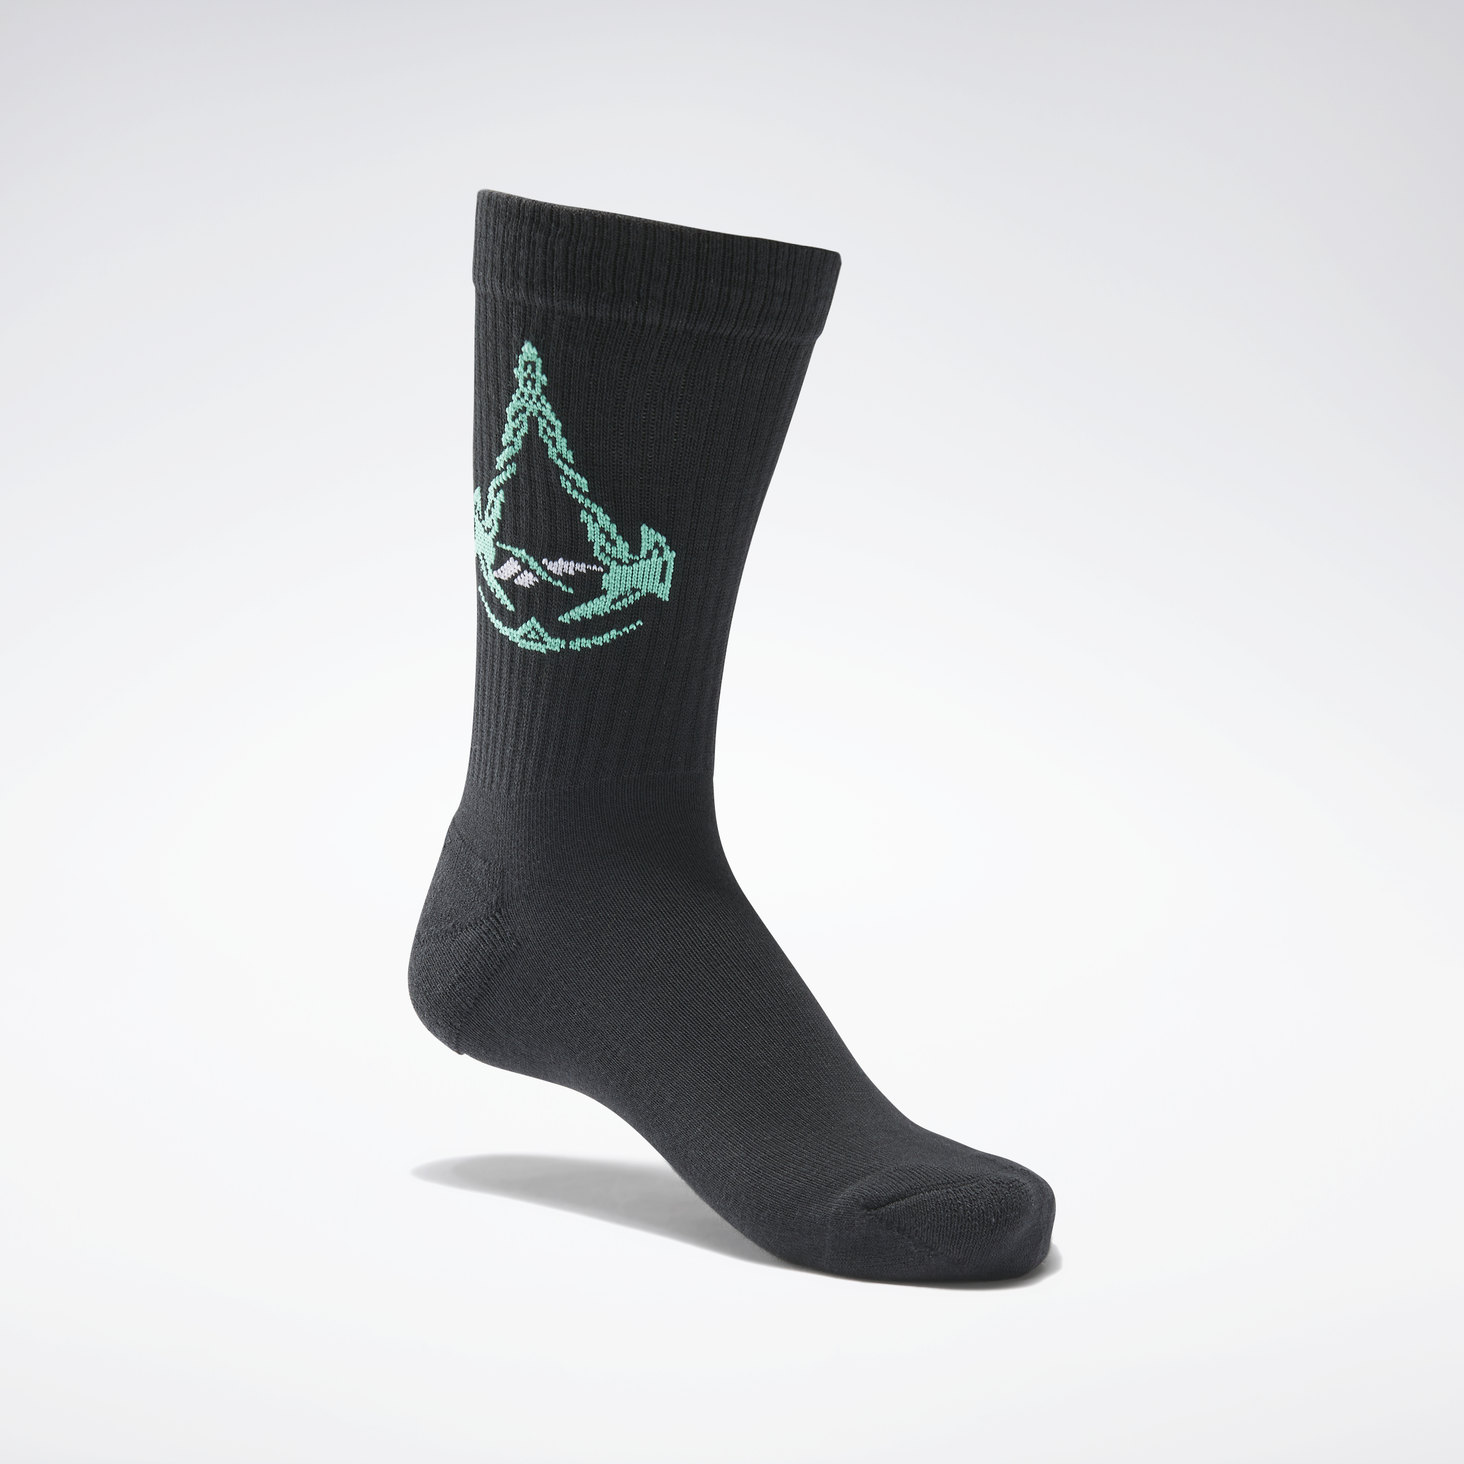 Assassin's Creed Socks